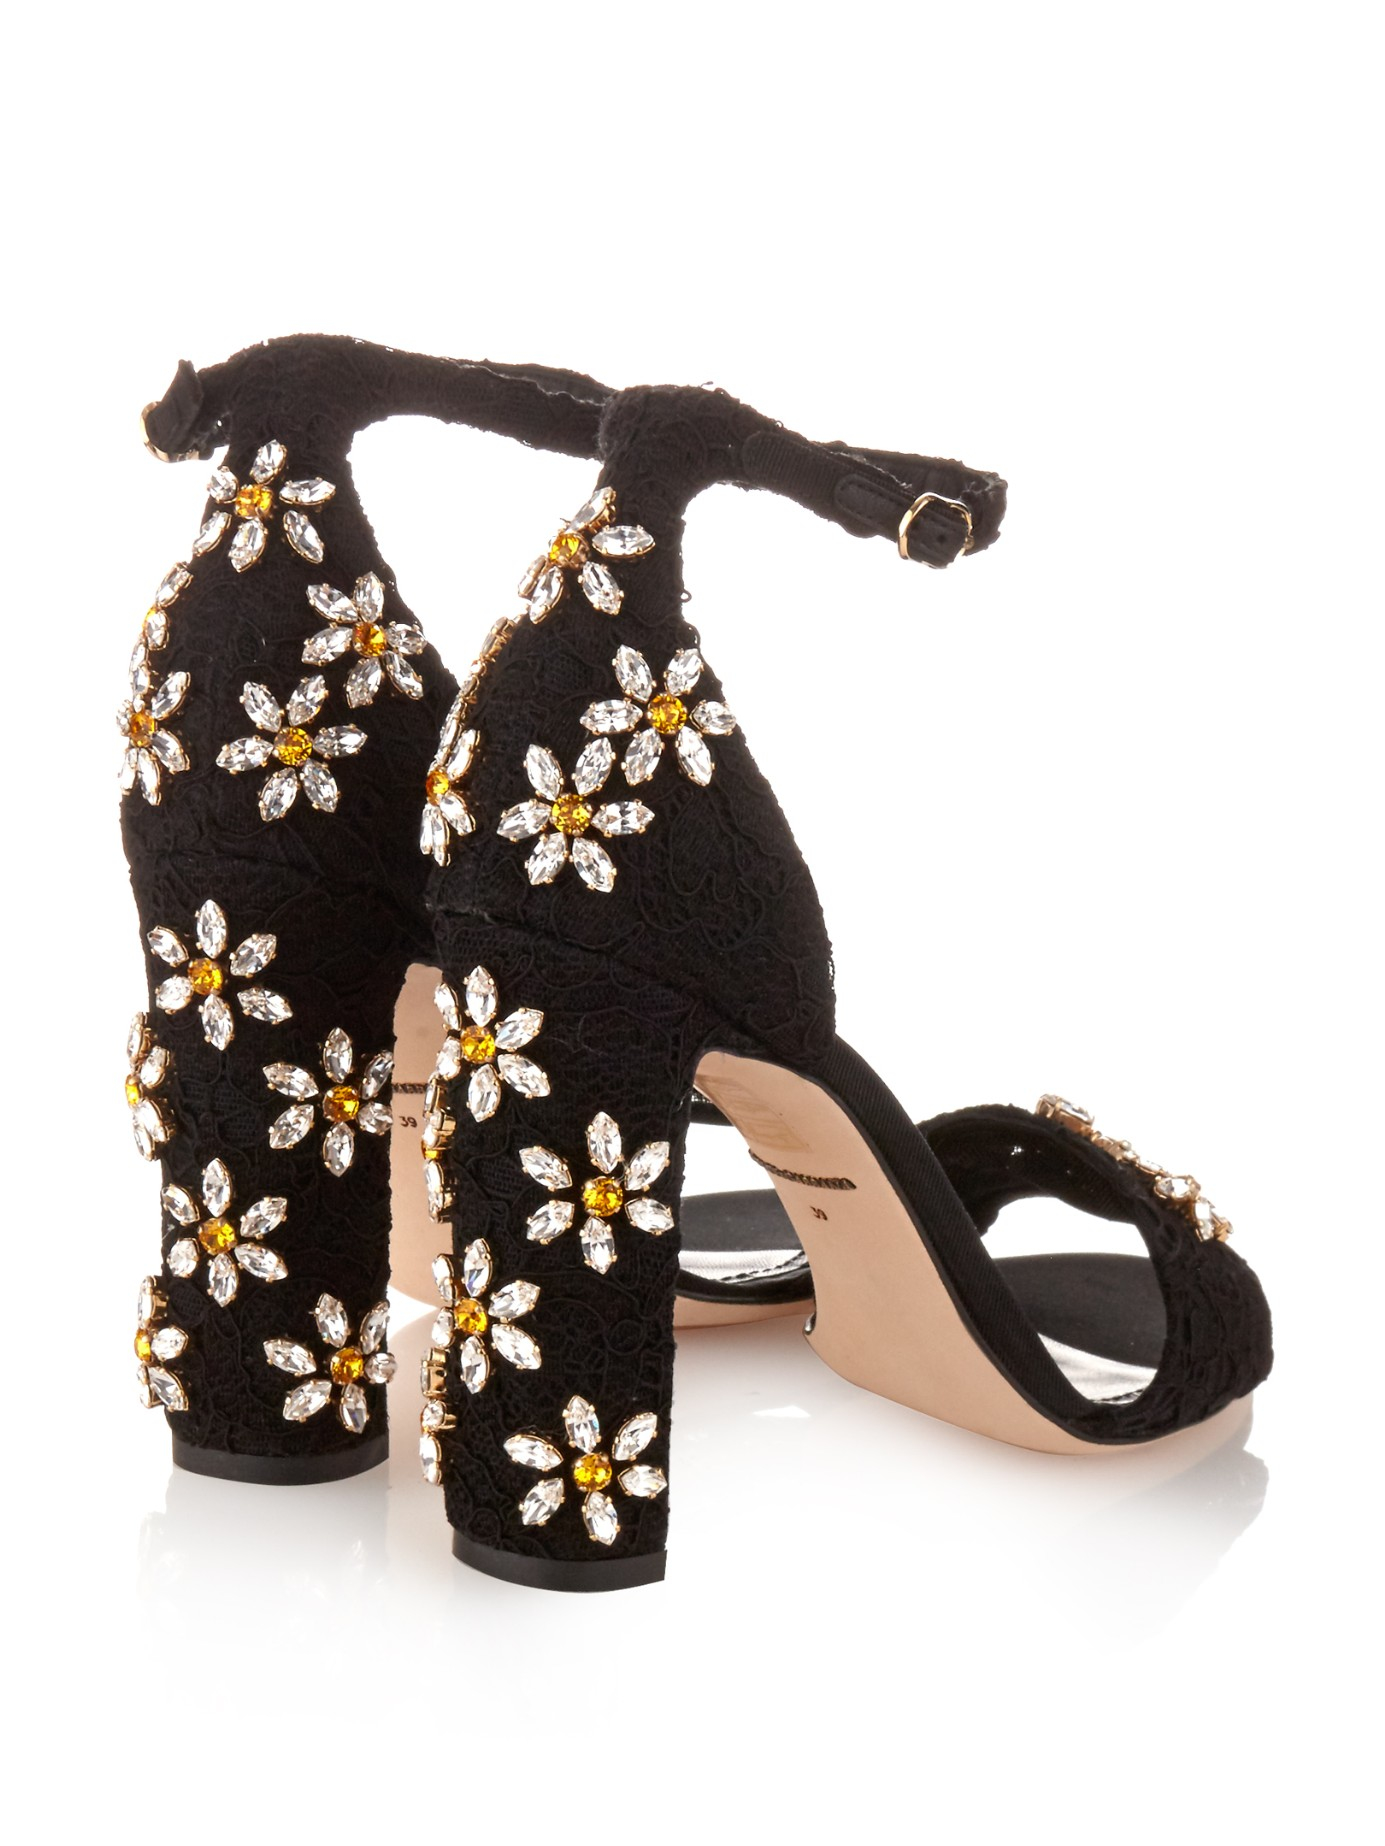 Dolce & Gabbana Daisy Crystal-embellished Sandals in Black | Lyst